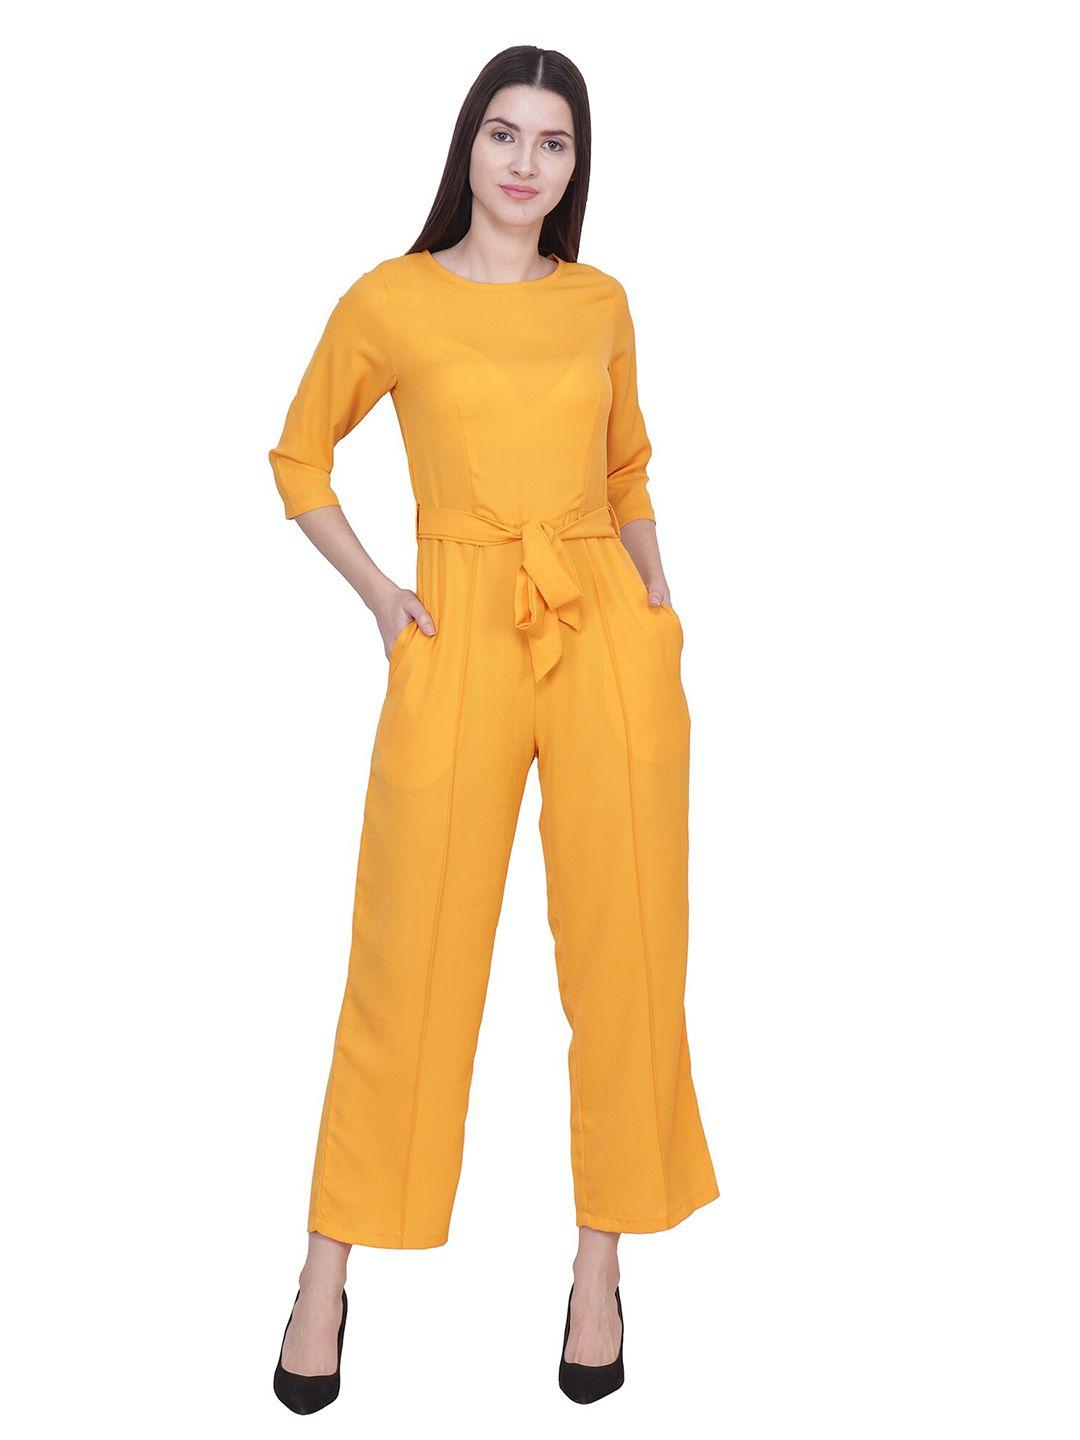 frempy yellow basic jumpsuit